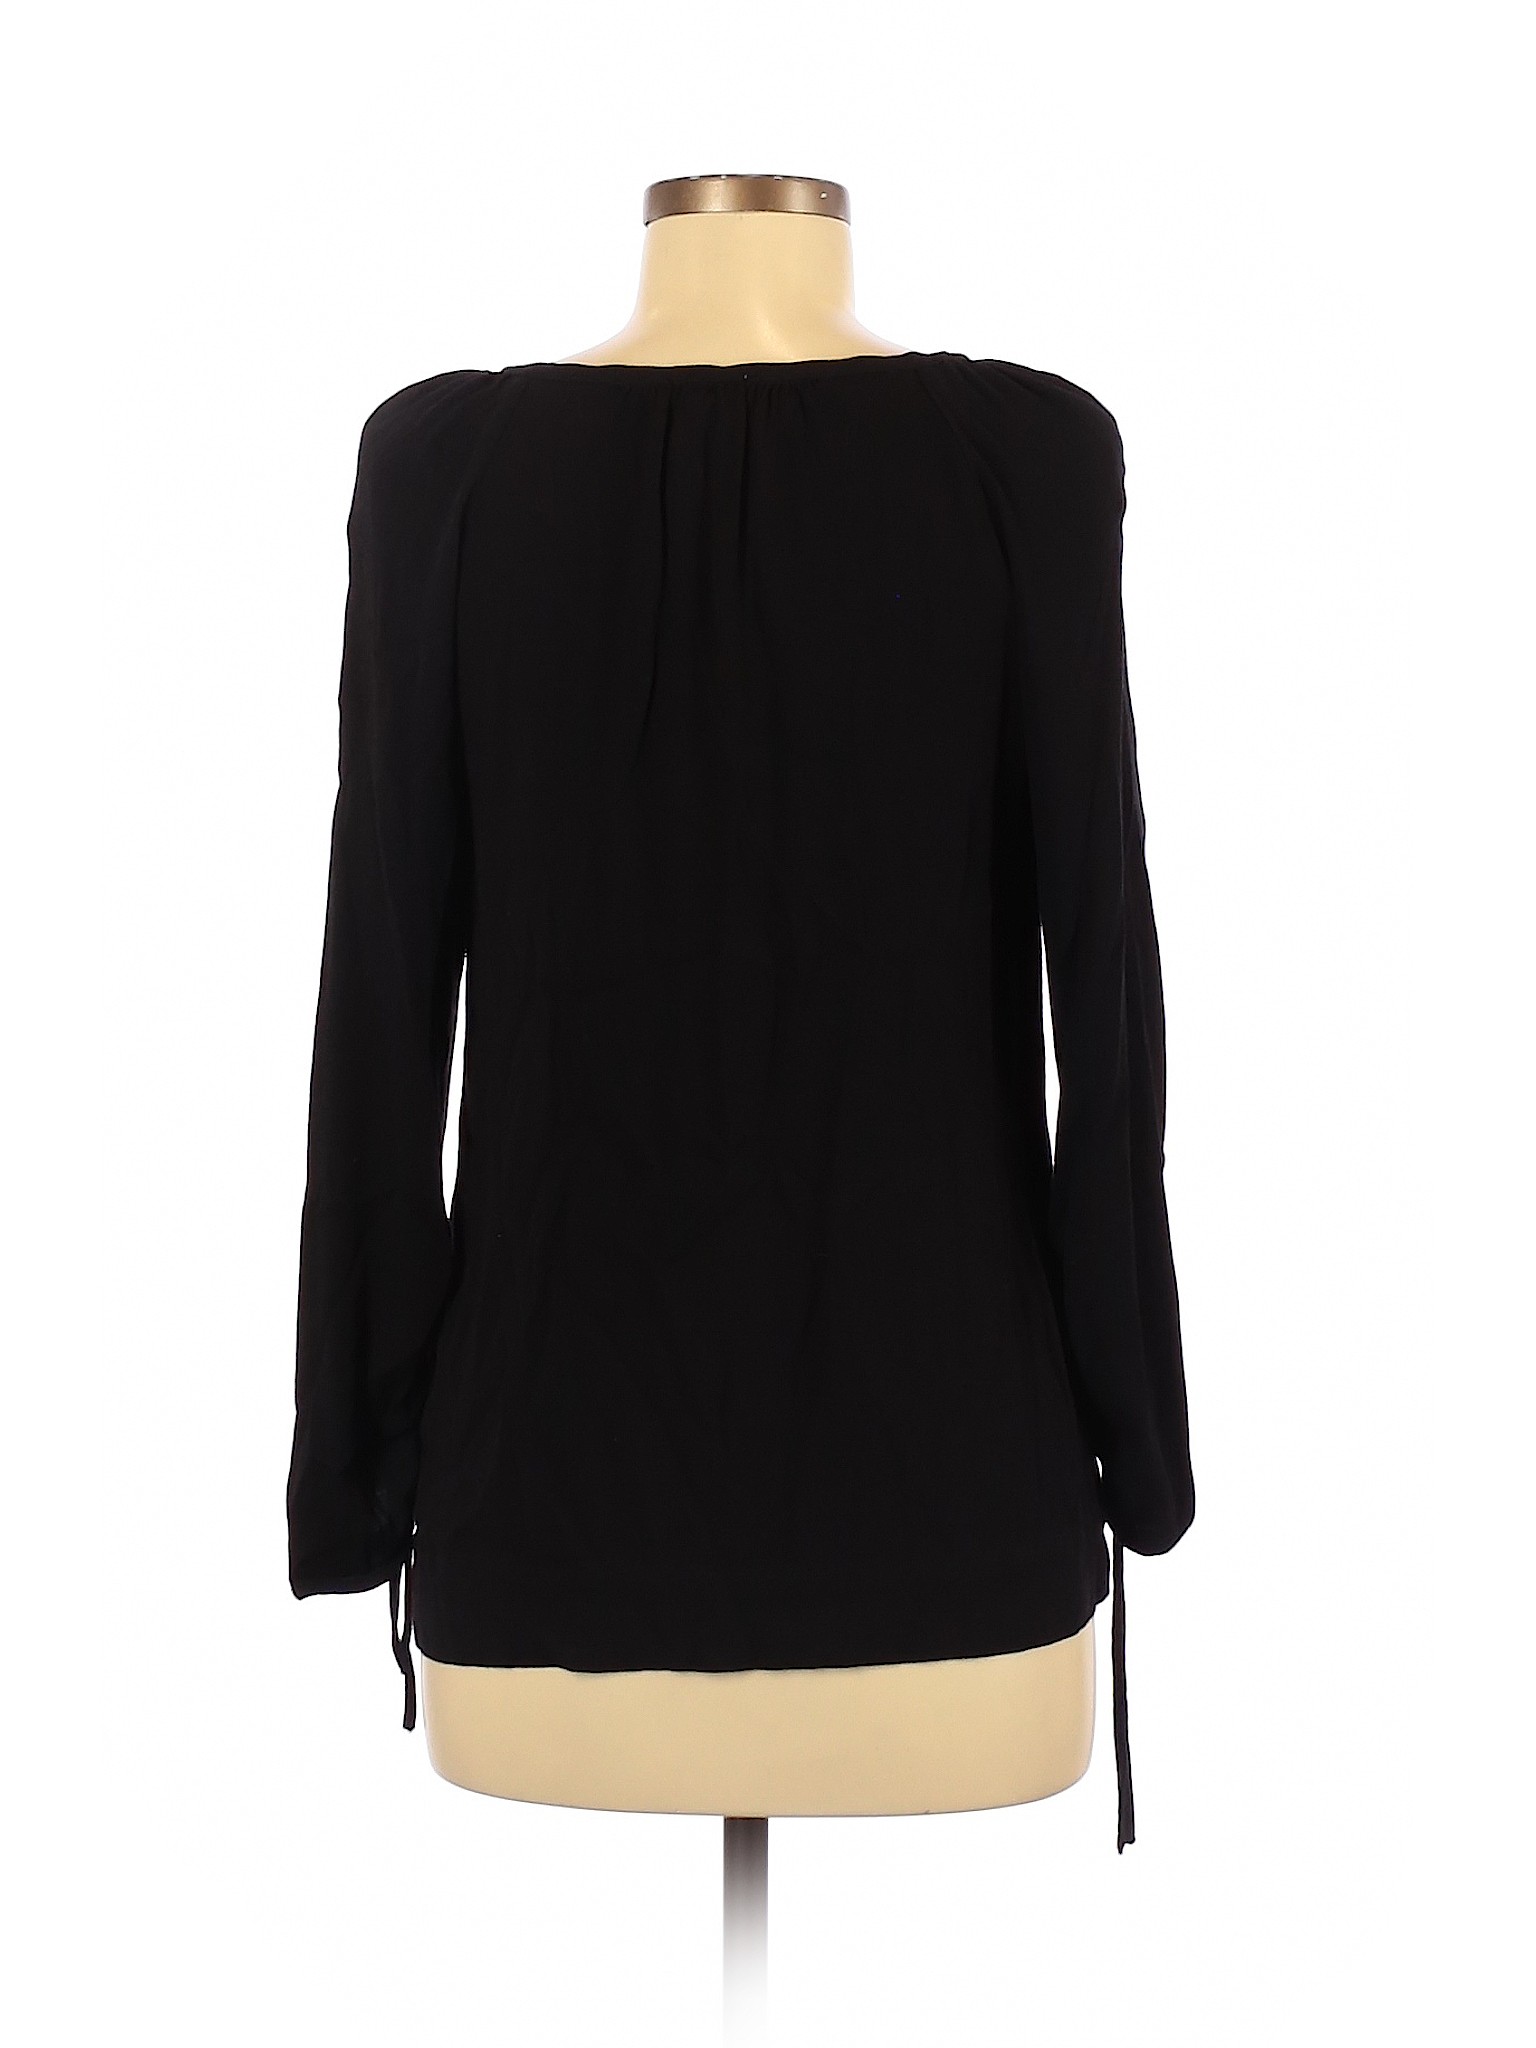 Point Sur Women Black 3/4 Sleeve Blouse S | eBay